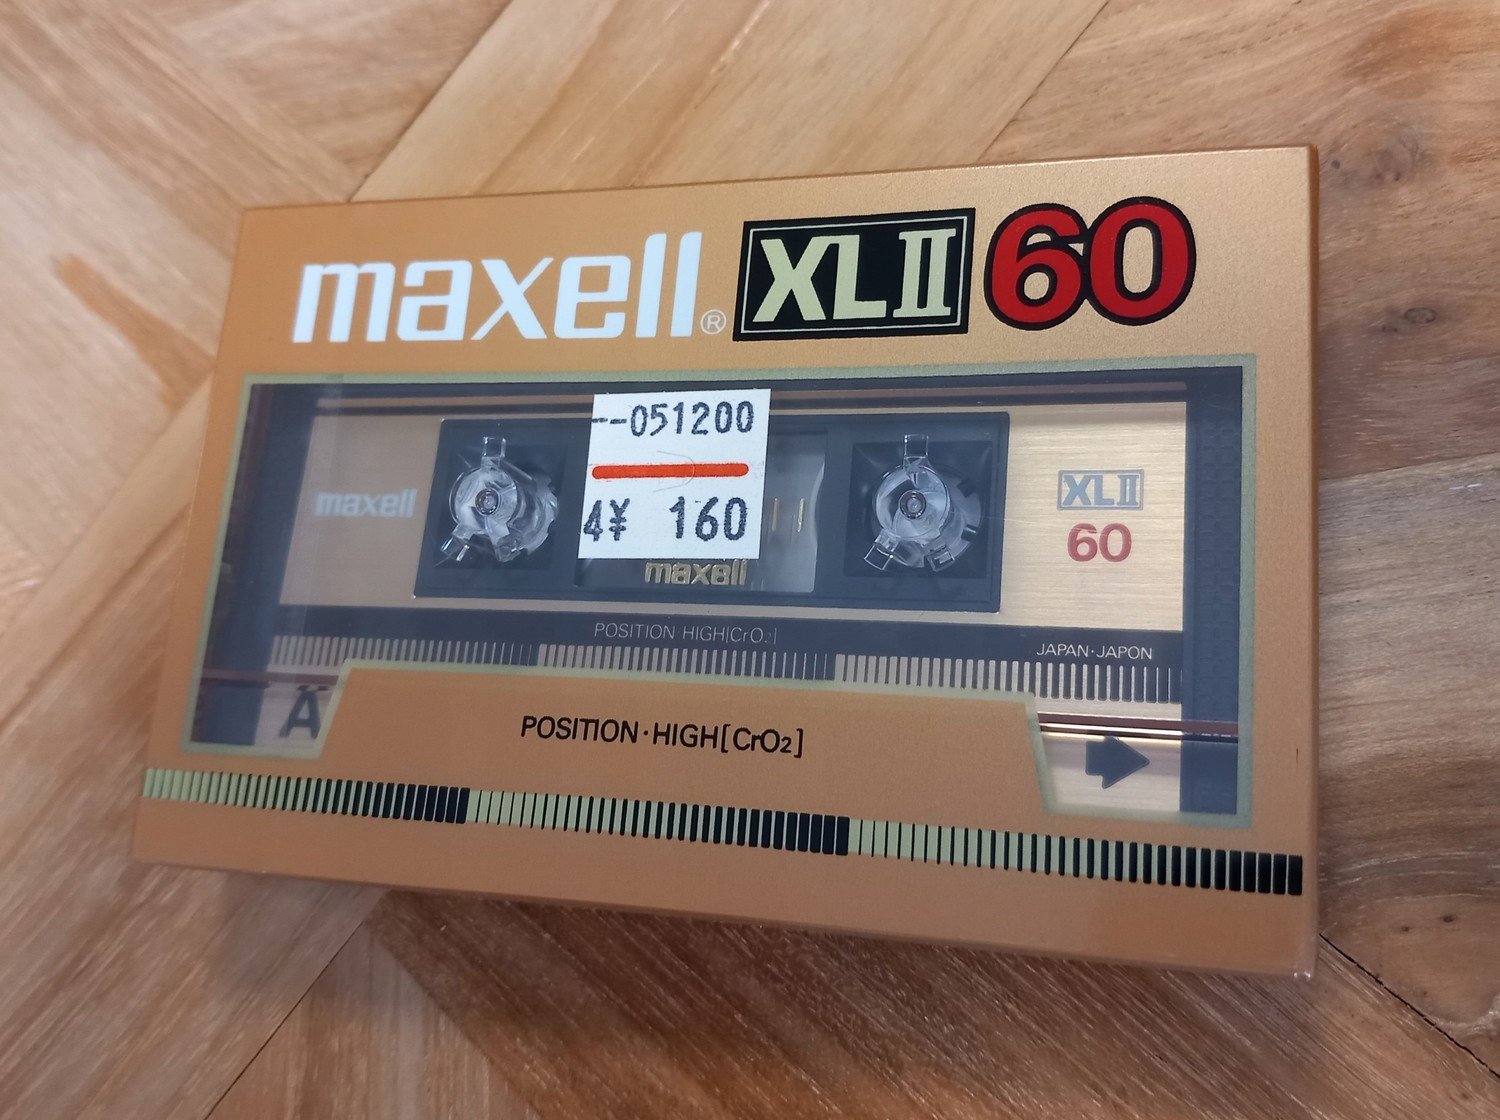 Maxell XLII 60 magnetofonová kazeta